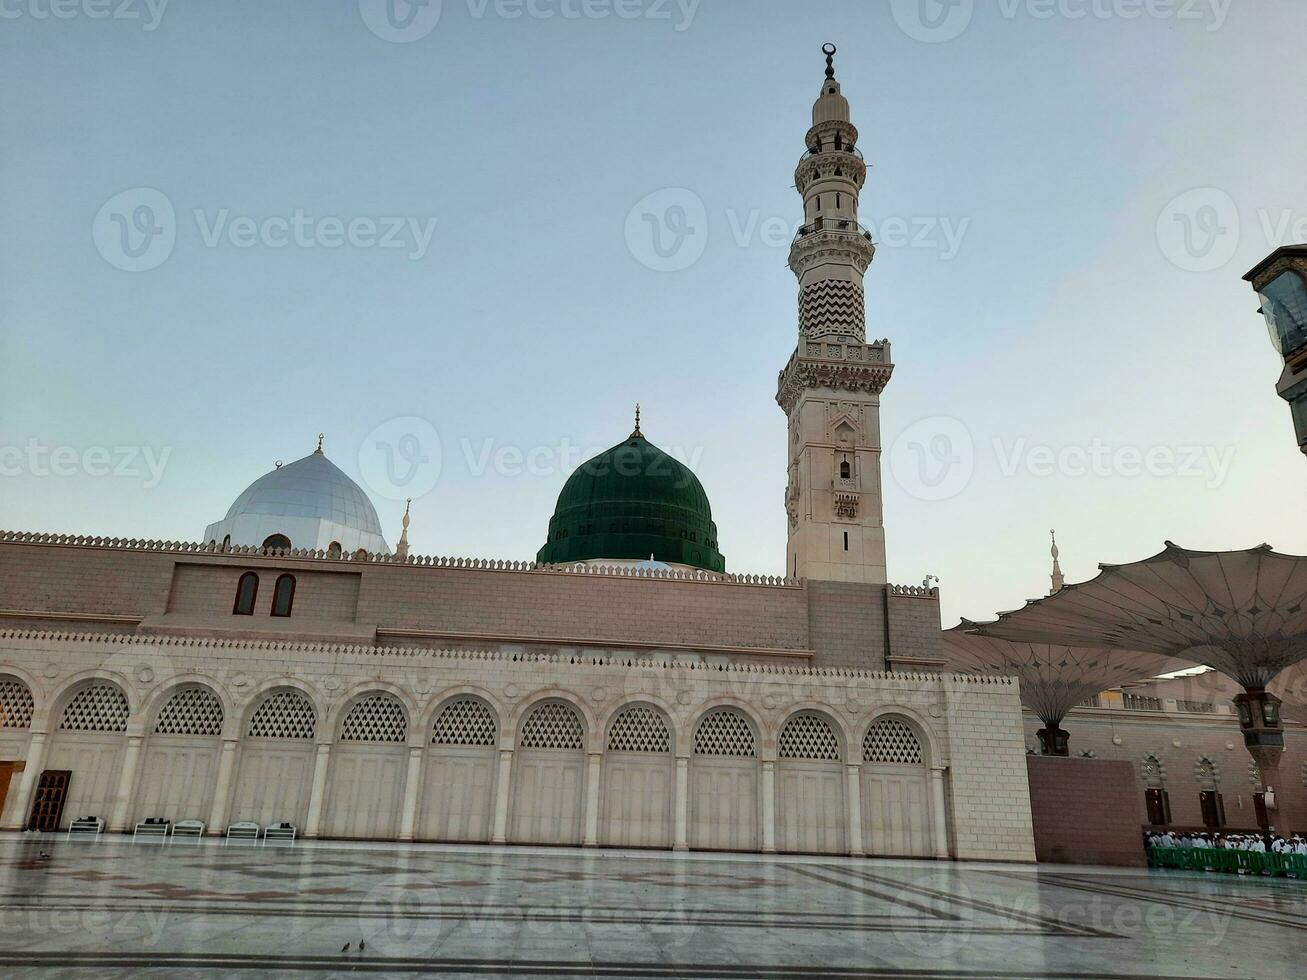 hermosa Mañana ver de masjid Alabama nabaui, medina verde cúpula, minaretes y mezquita patio. foto